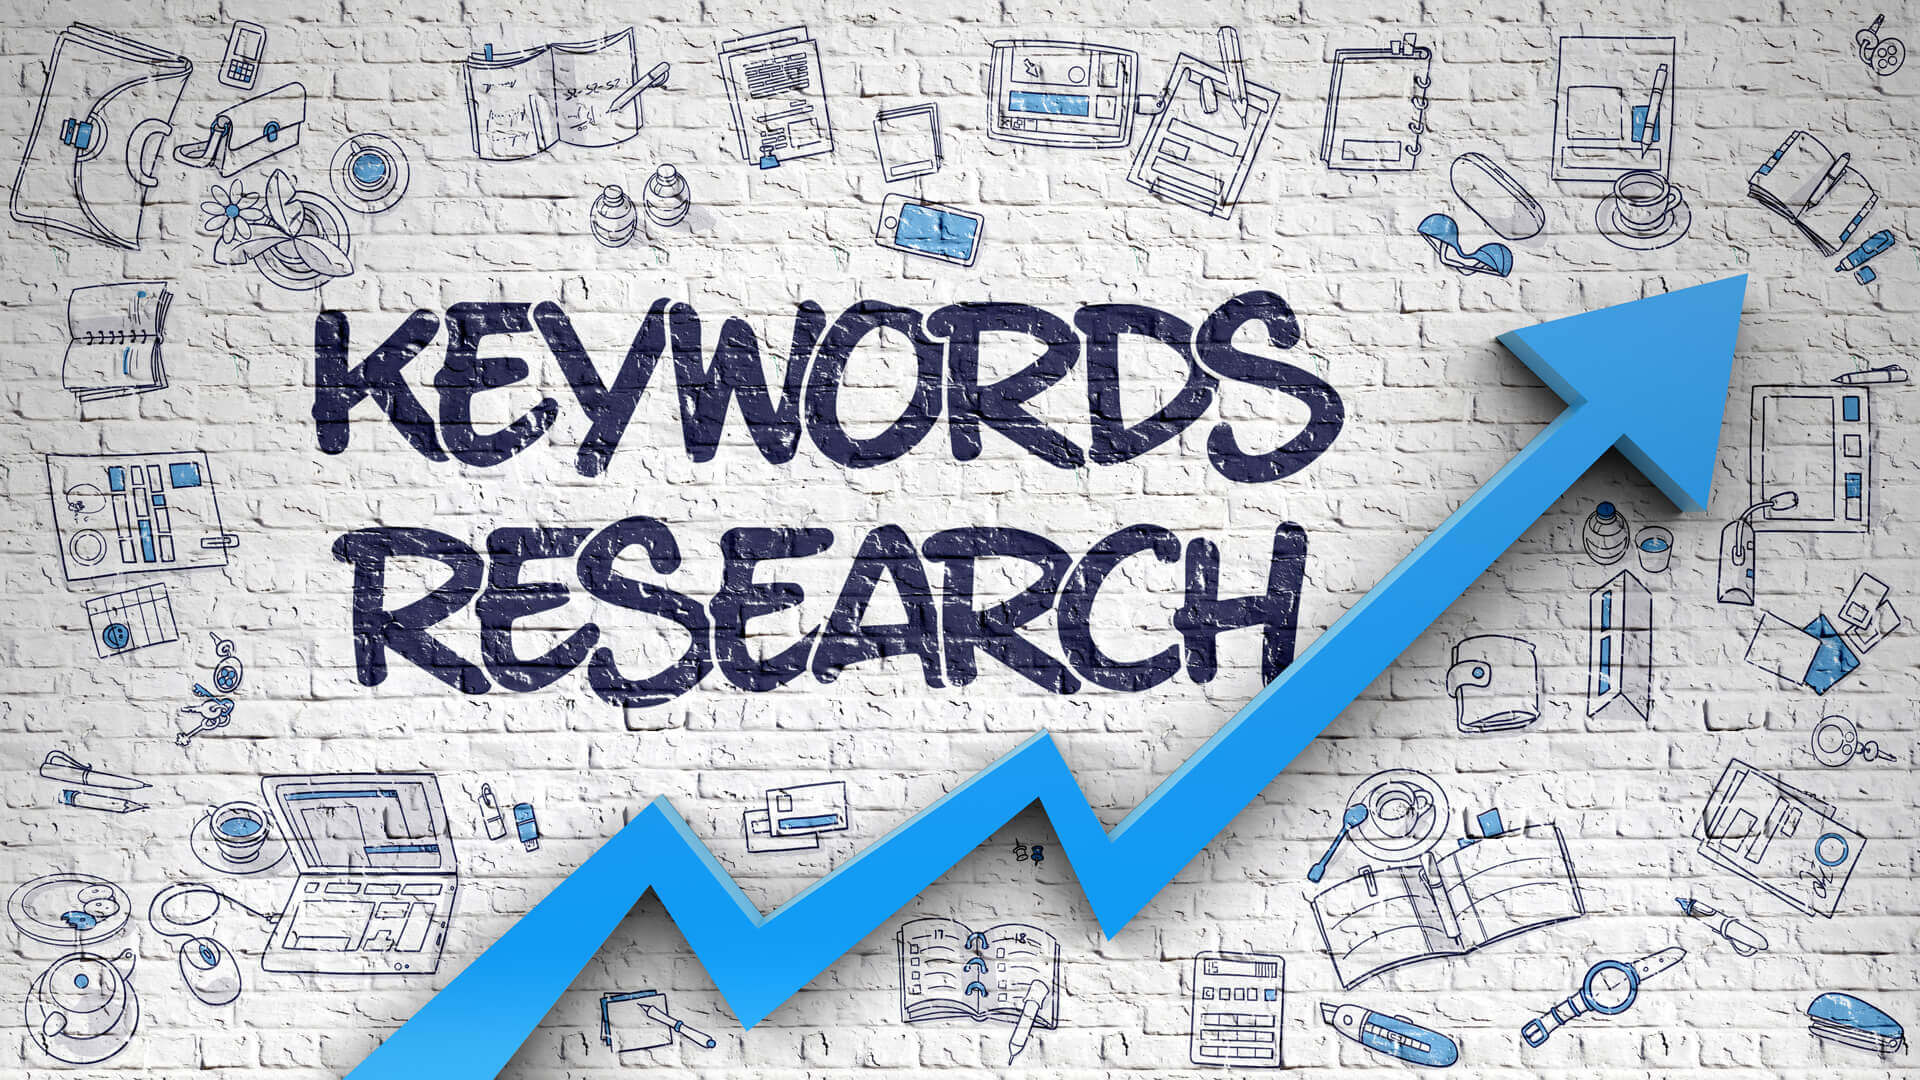 Marketing Keyword Research - Keyword Research - HD Wallpaper 